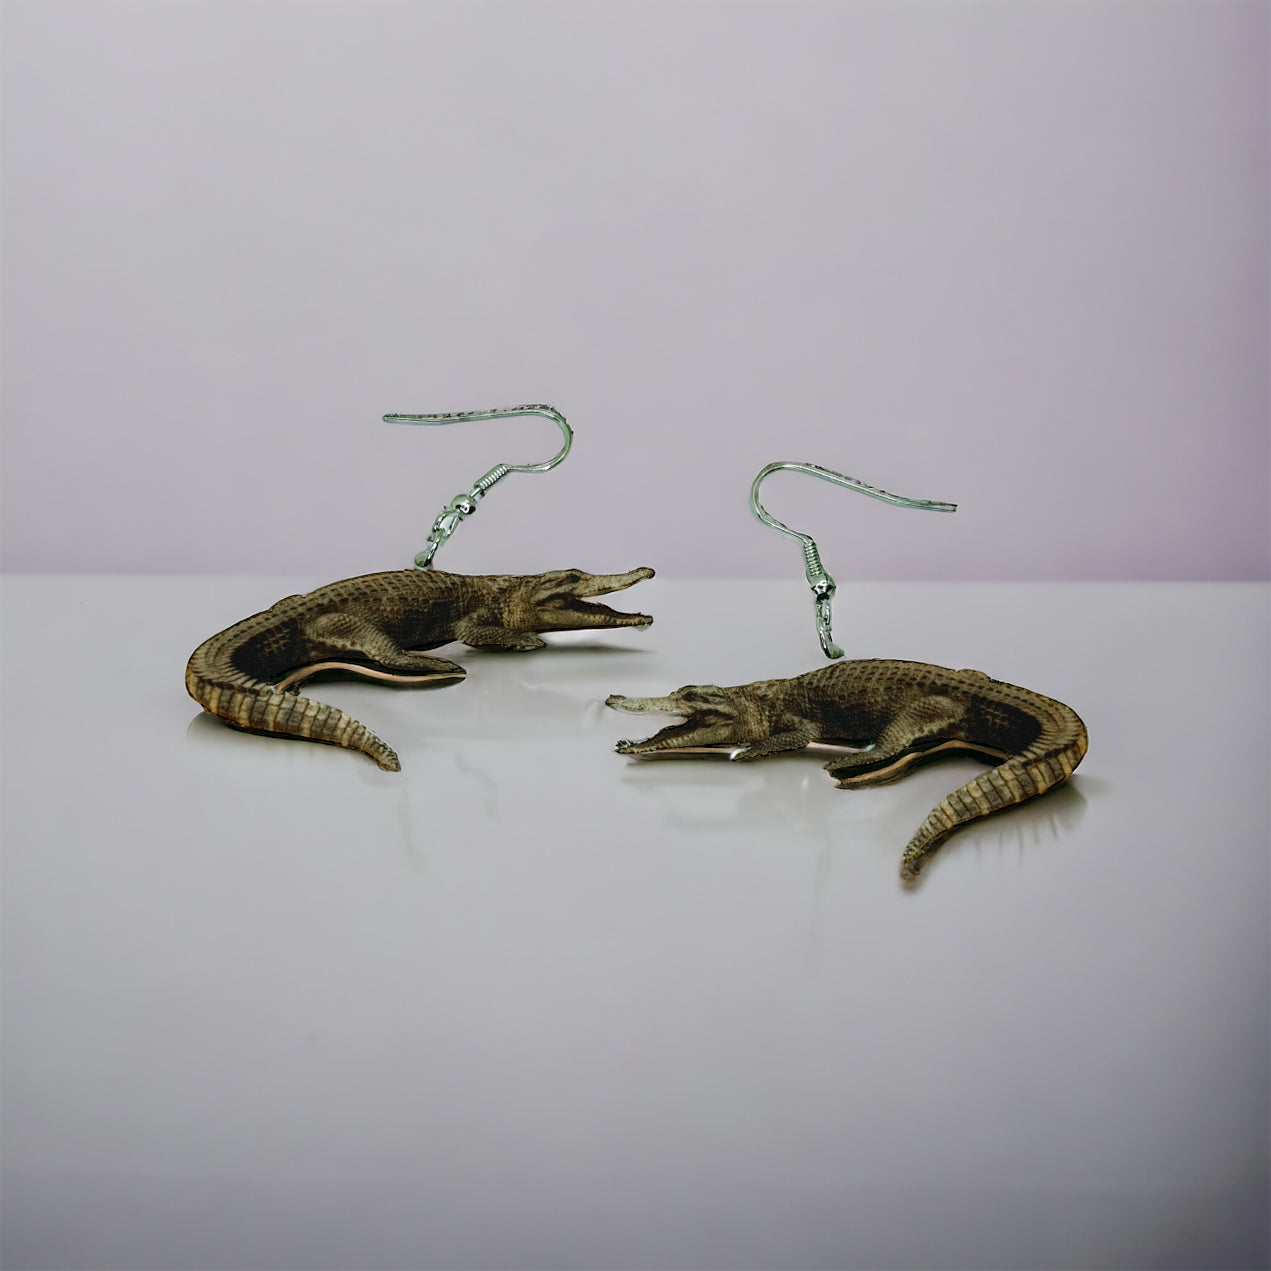 Alligator Earrings - Alligator Jewelry, Handmade Earrings, Alligator Skin, Animal Earrings, Animal Jewelry, Crocodile, Gators